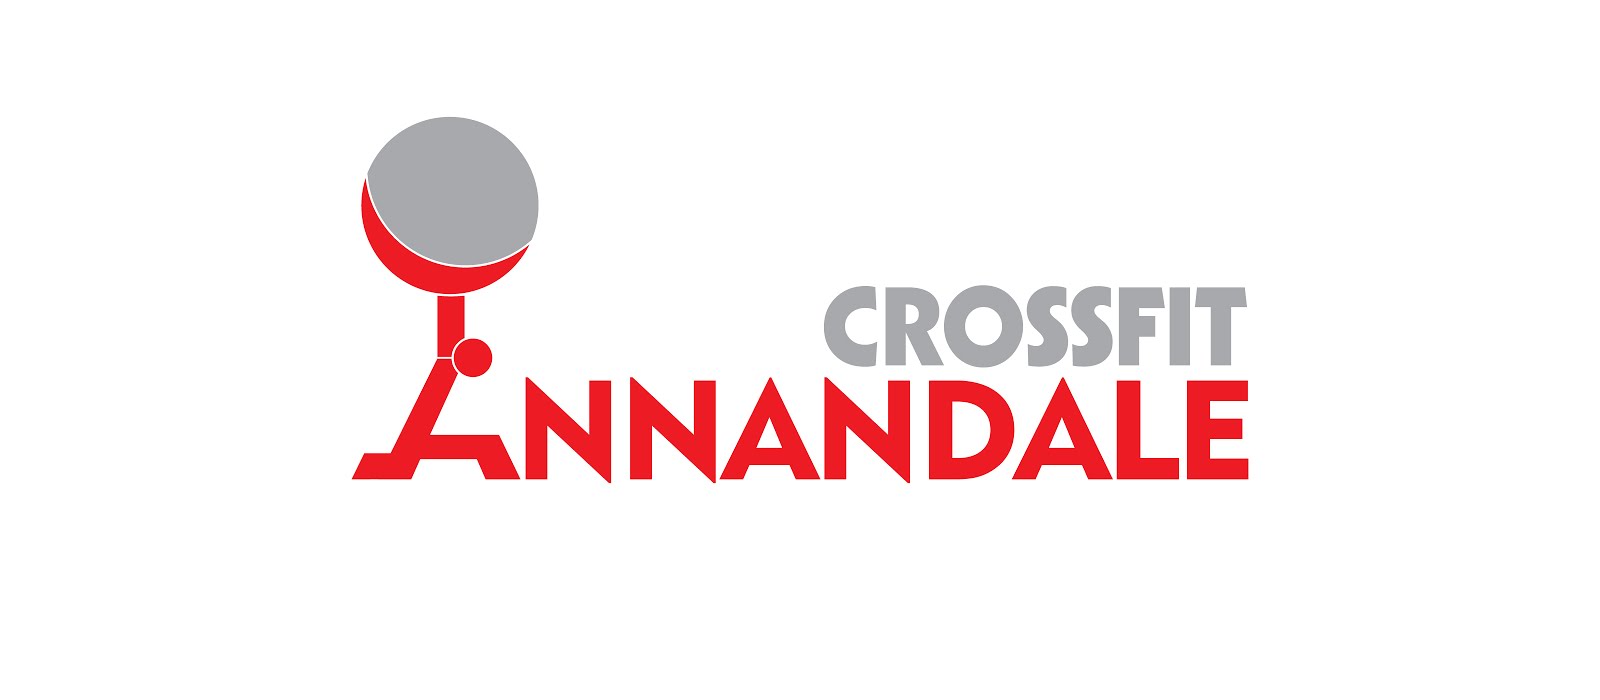 Crossfit Annandale